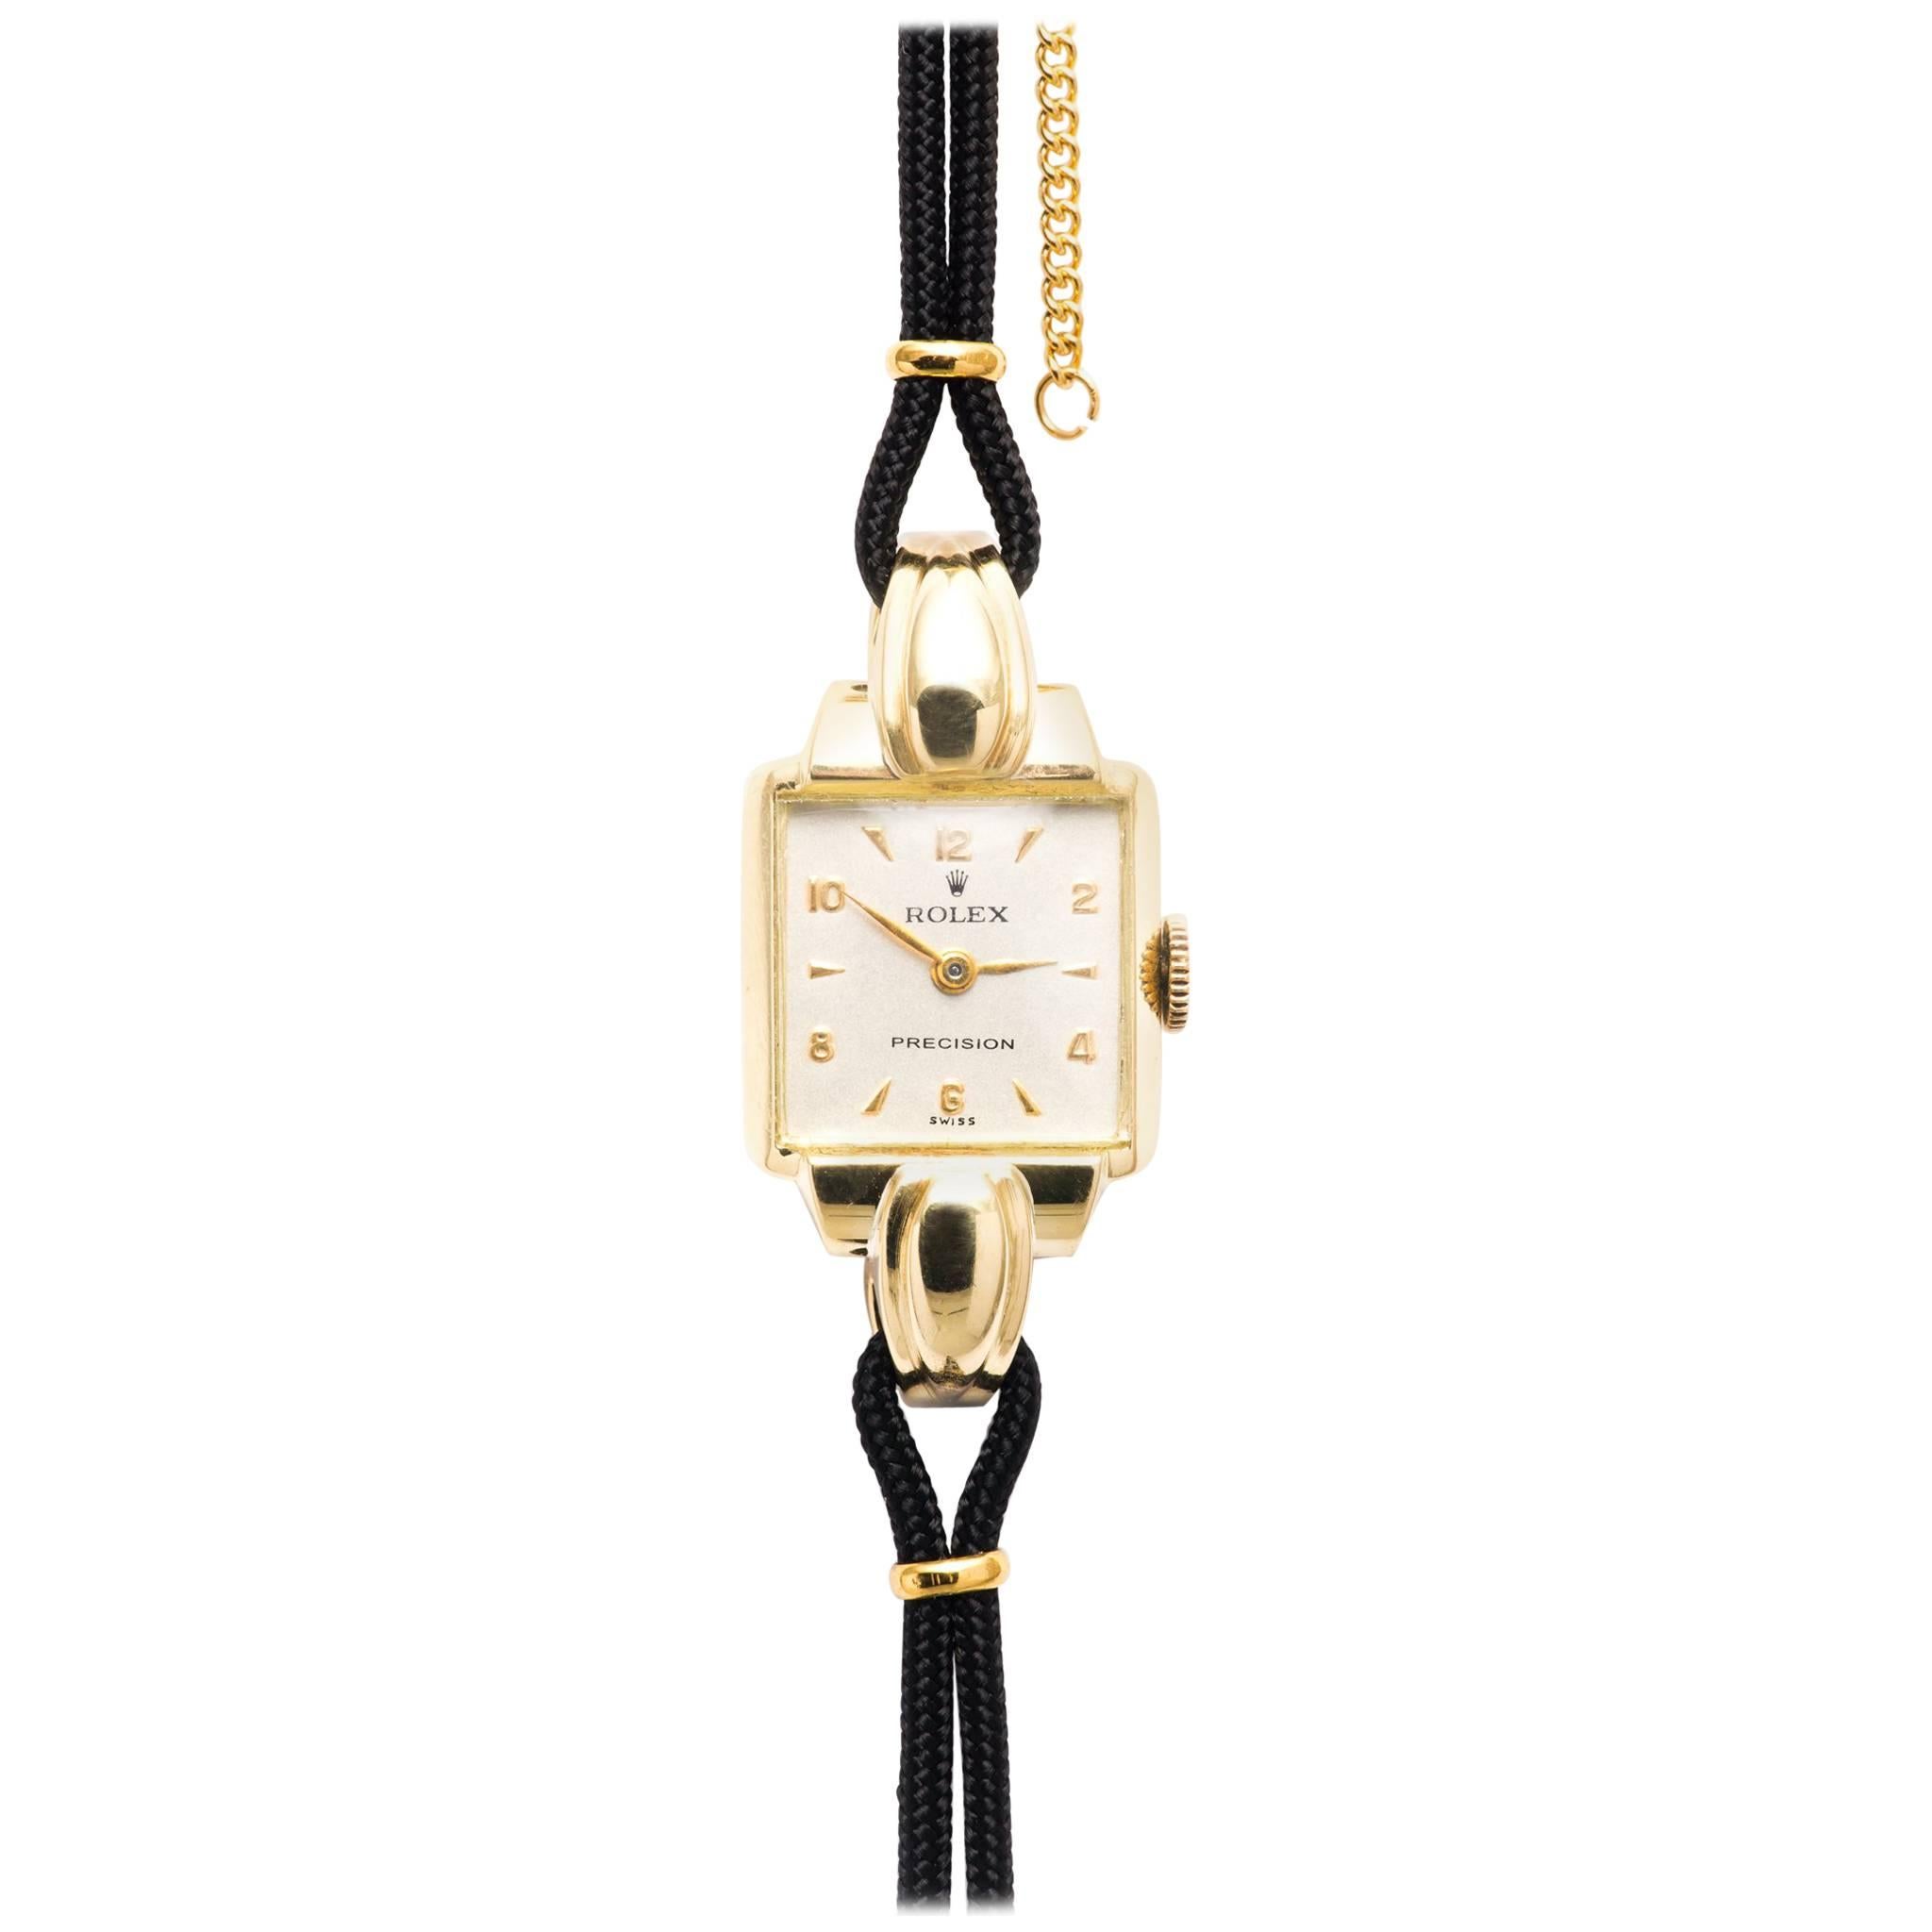 Rolex Ladies Yellow Gold Manual Wind Wristwatch